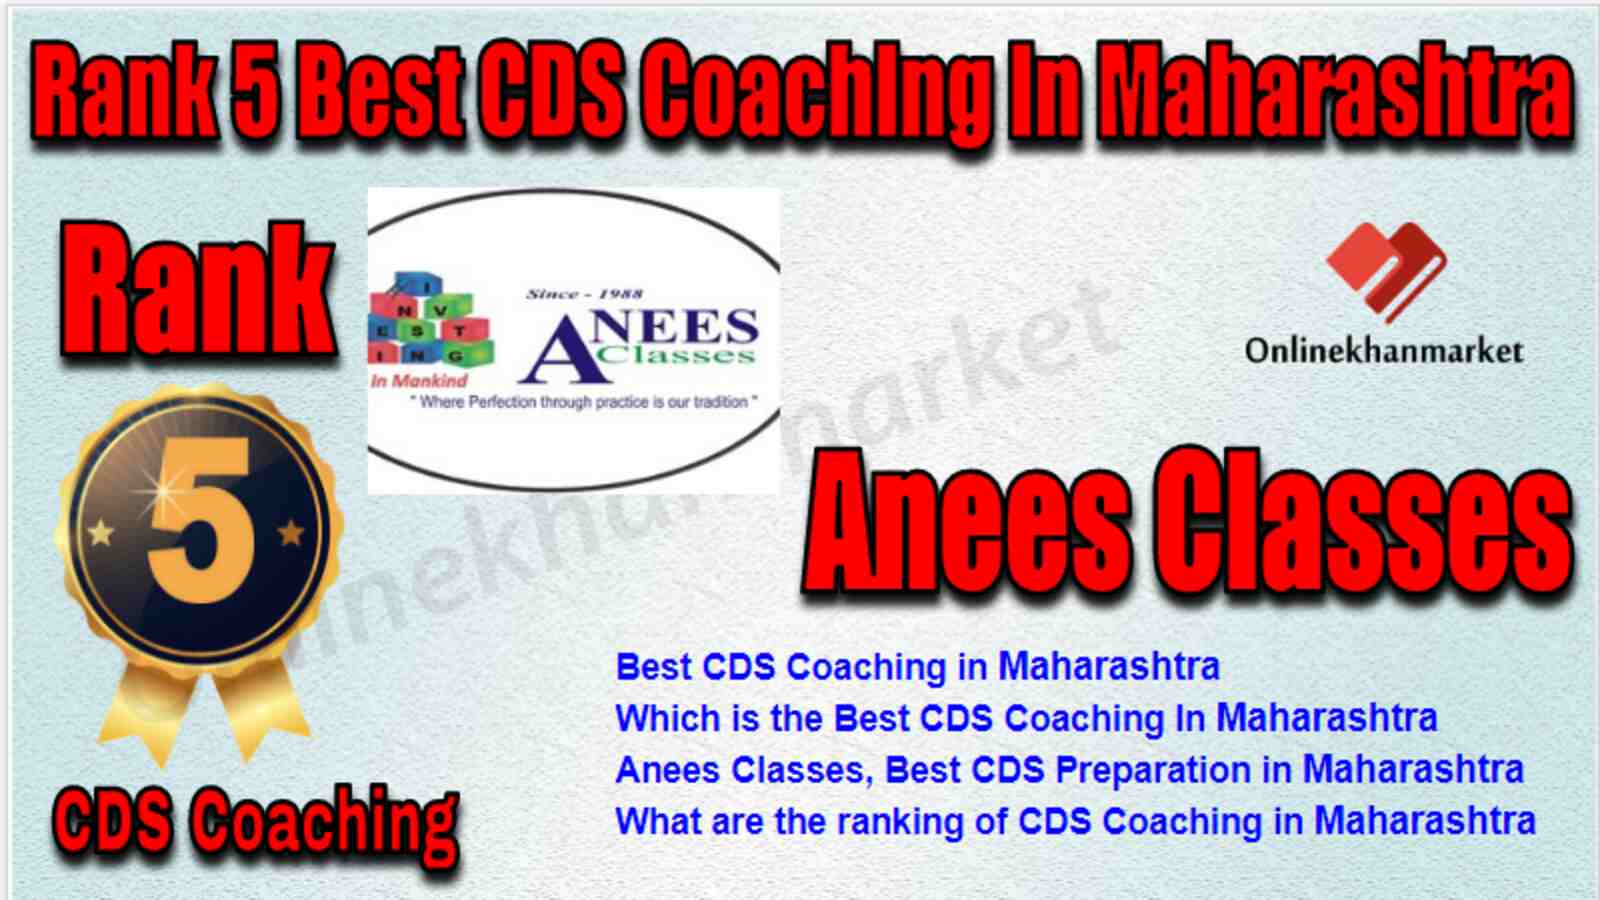 Rank 5 Best CDS Coaching in Maharashtra